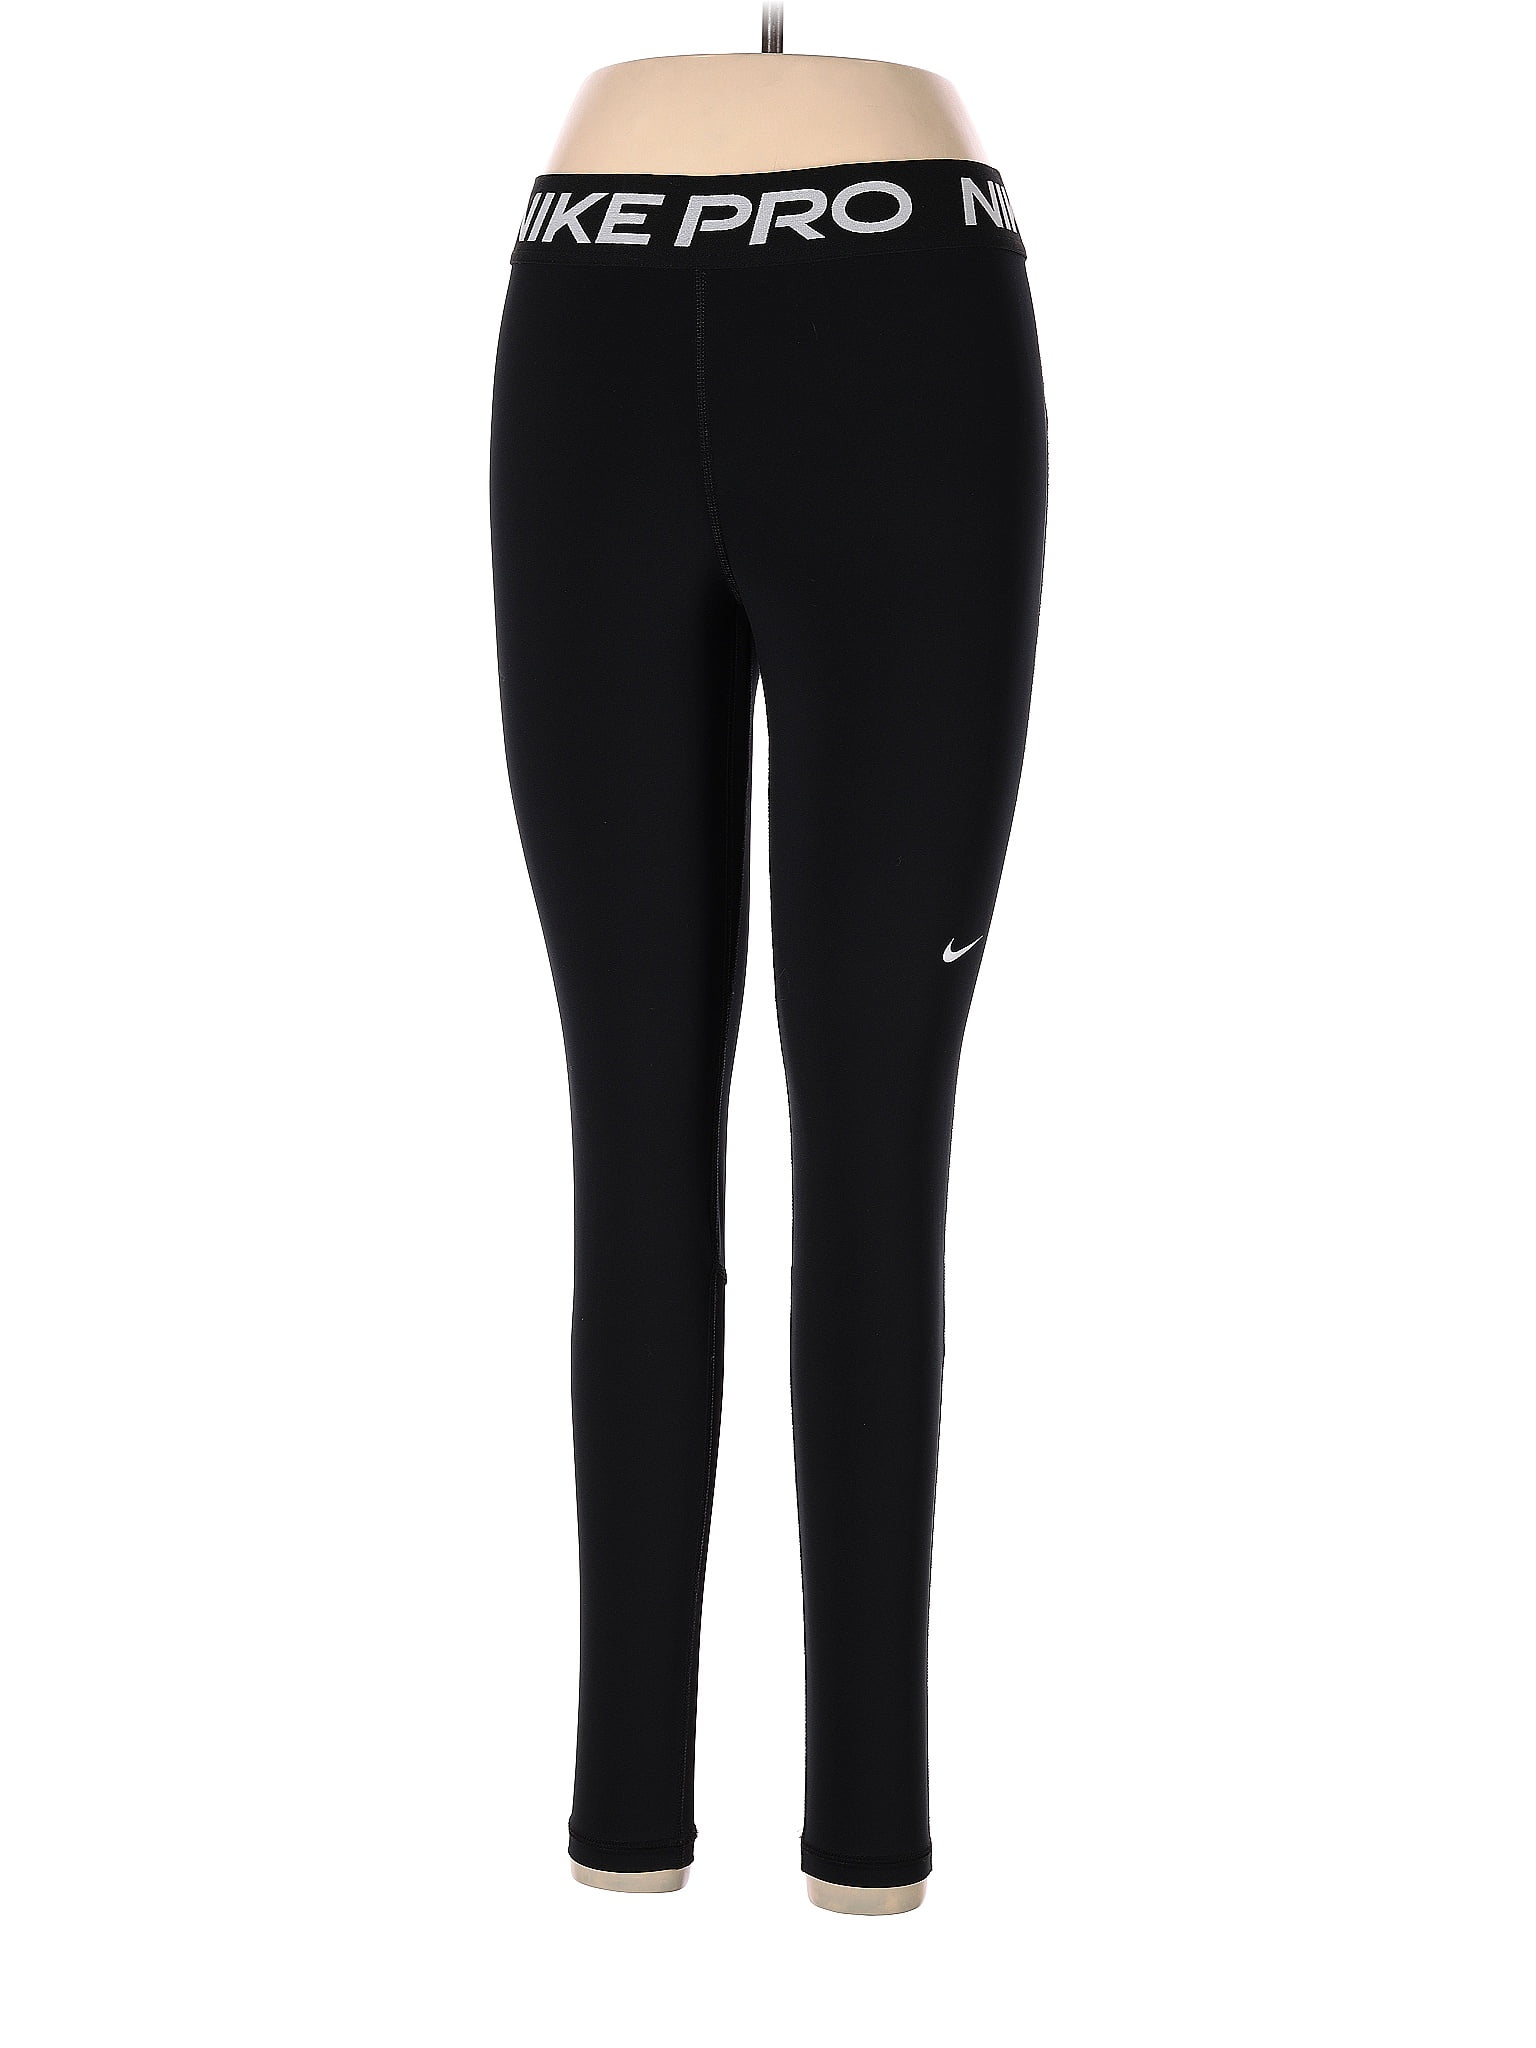 Nike Black Active Pants Size M - 55% off | thredUP